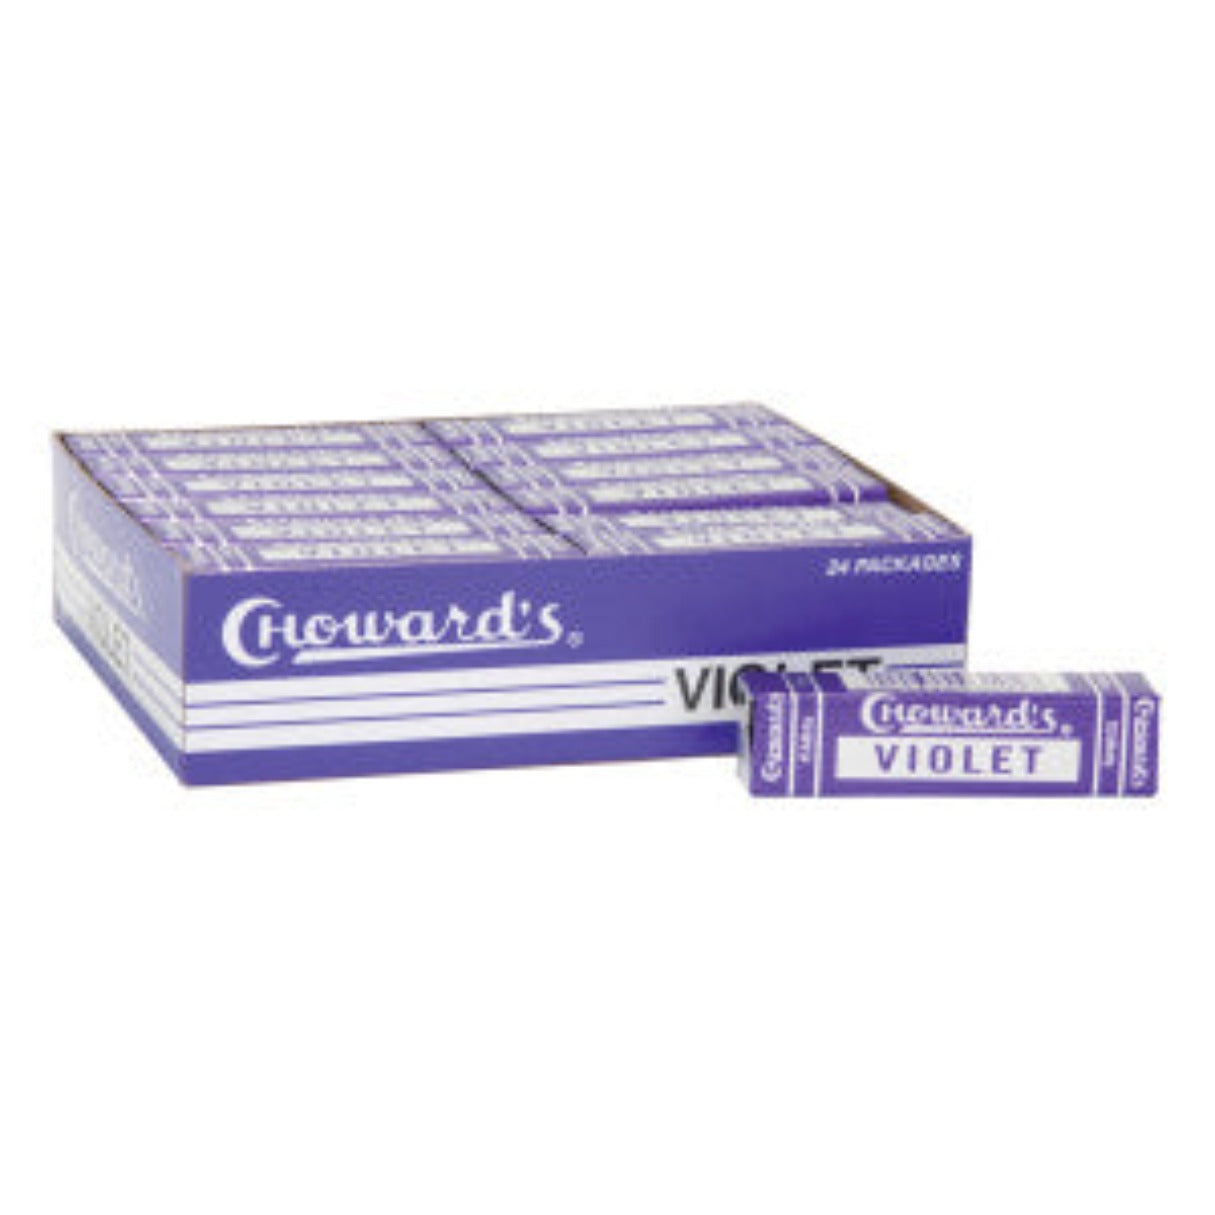 C Howard's Violet Scented Gum - 24ct